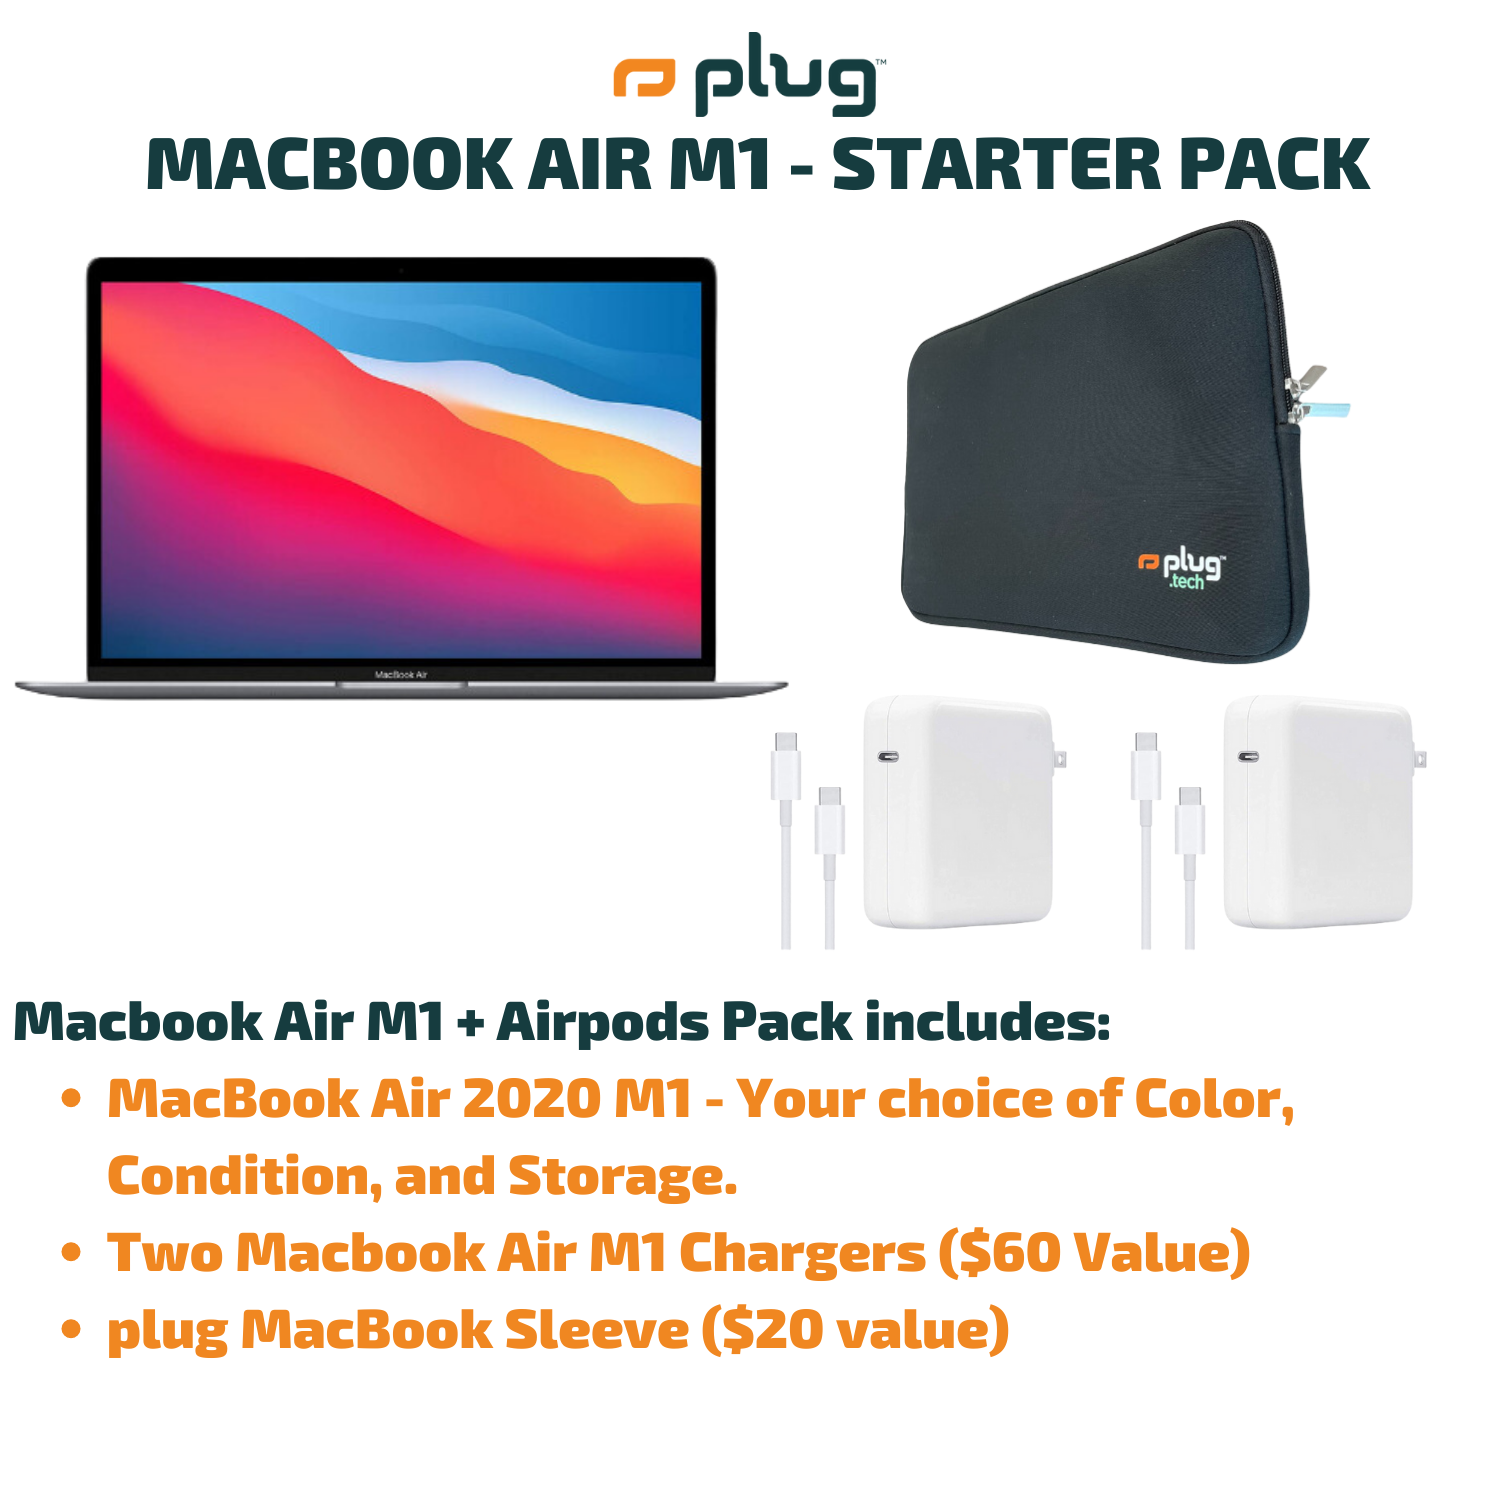 Macbook Air M1 - Starter Pack